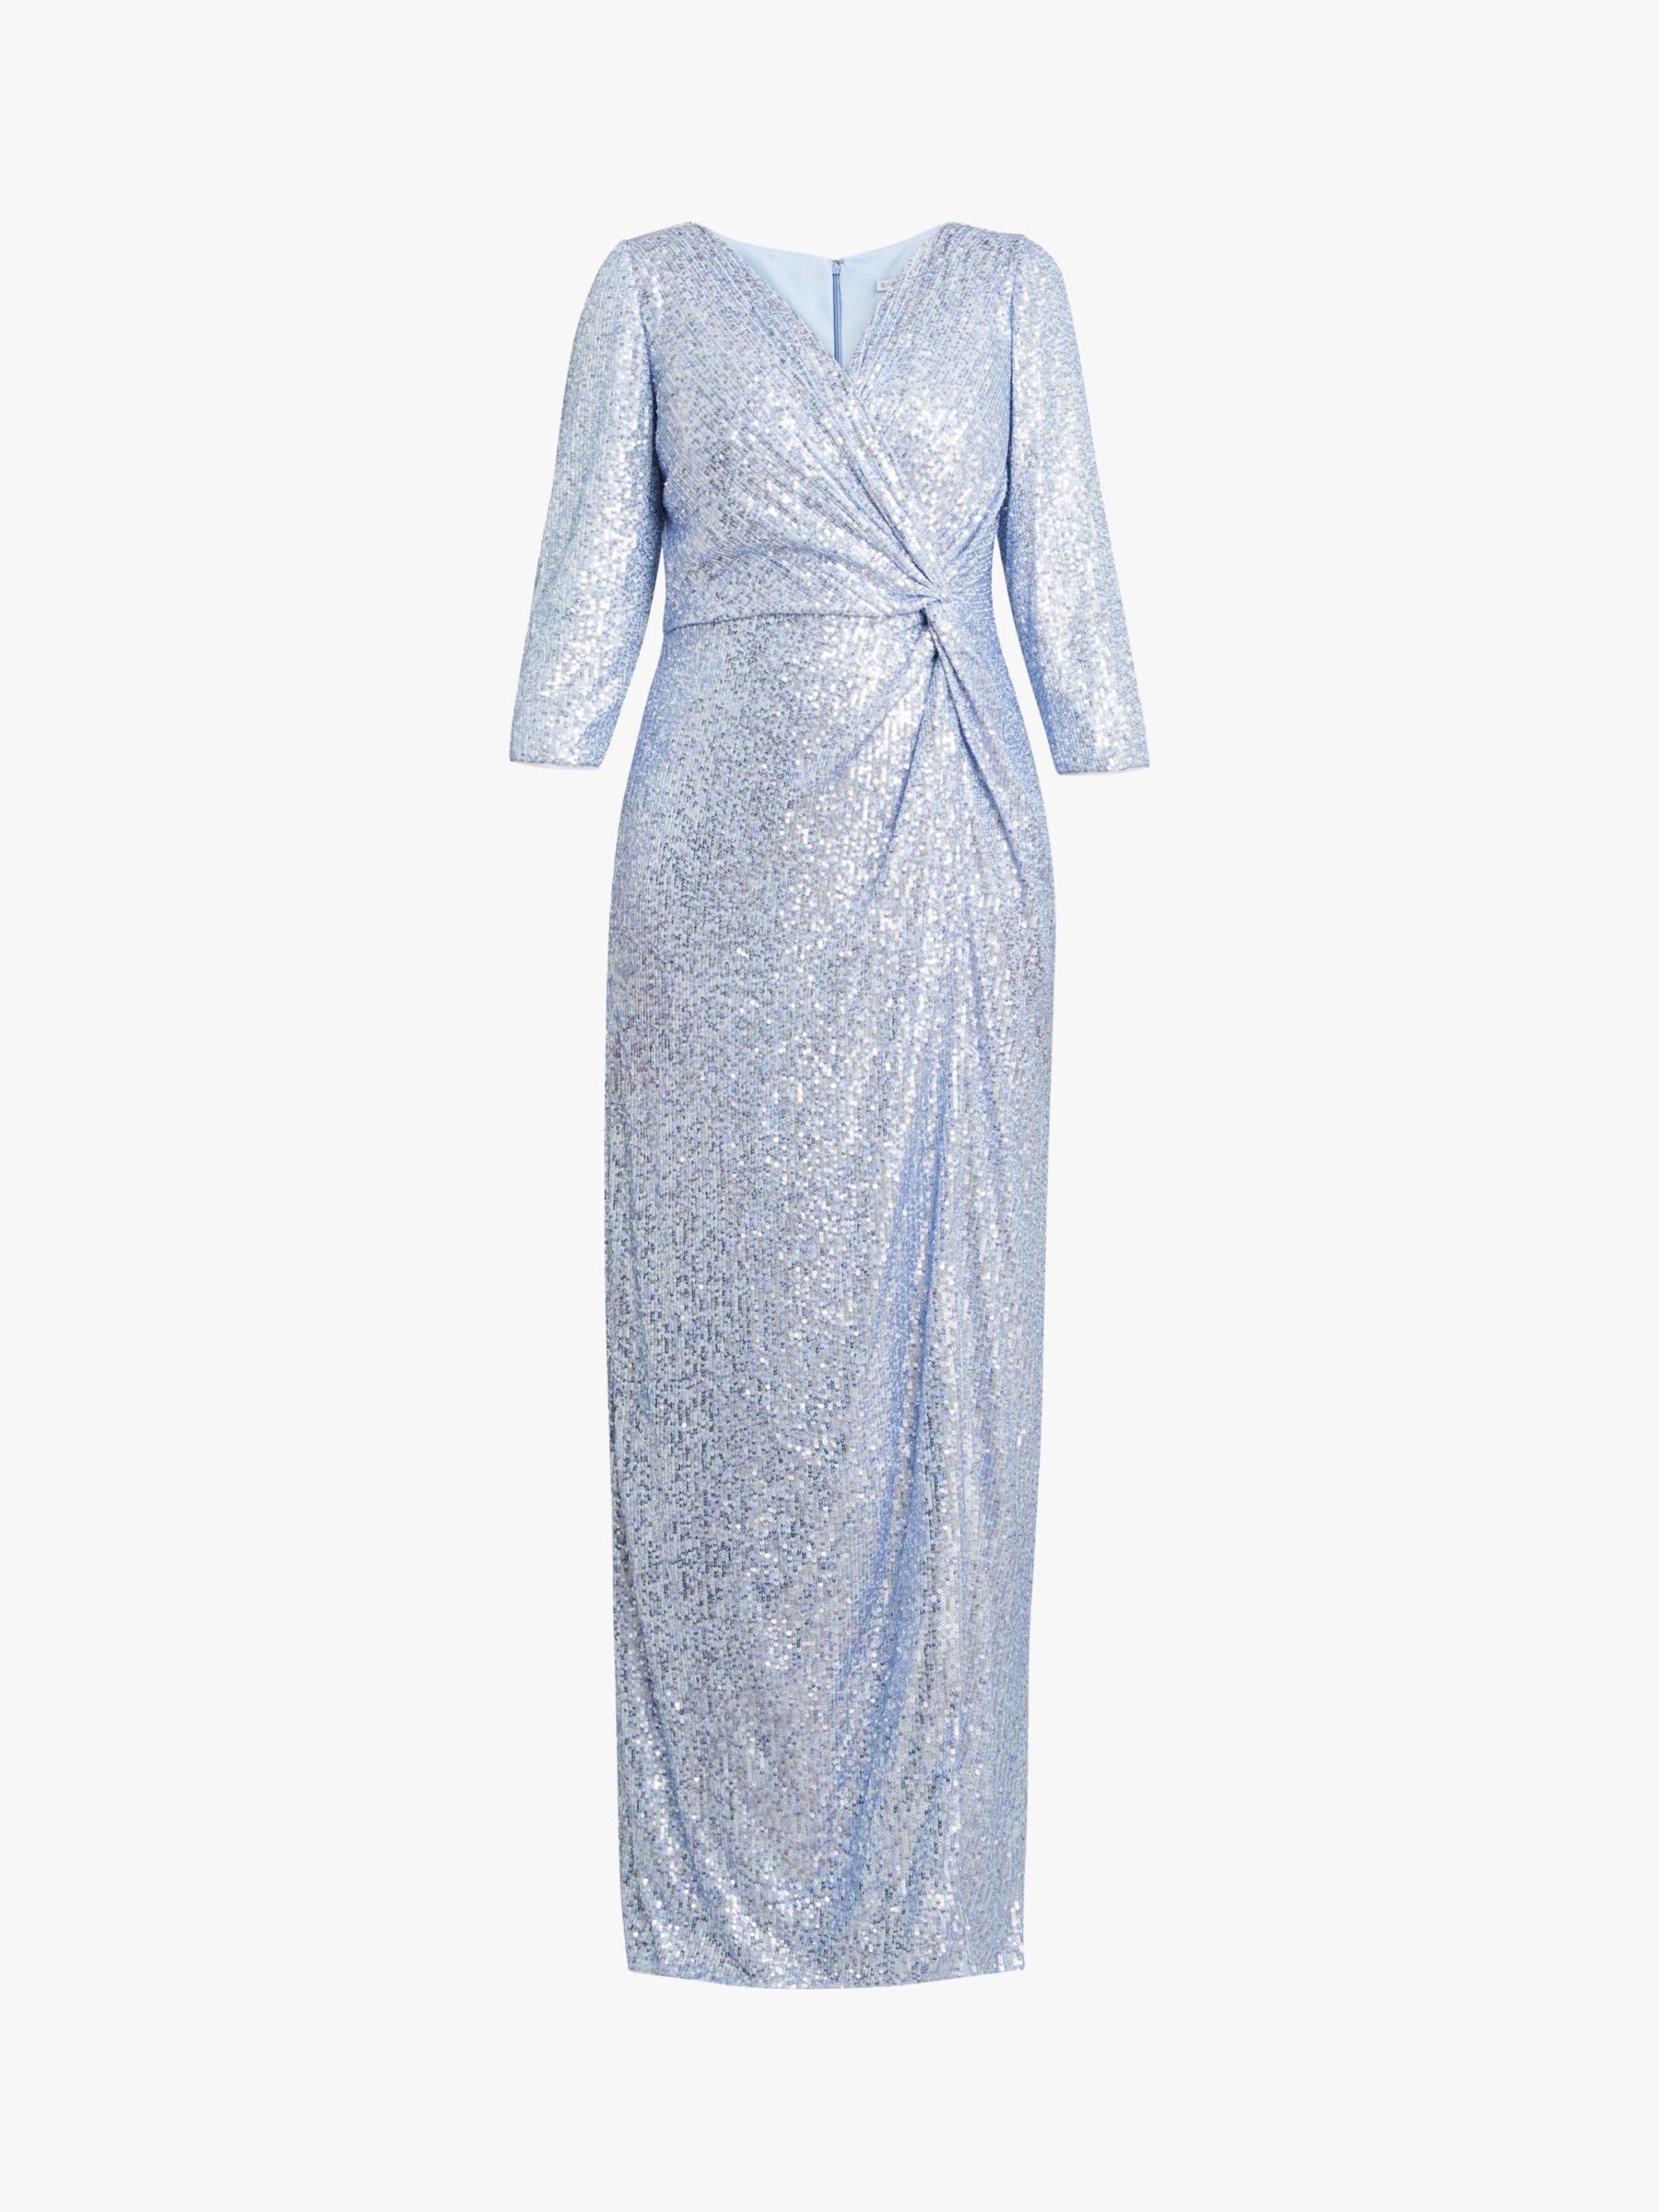 Buy Gina Bacconi Jacynda Sequin Wrap Front Maxi Dress Online at johnlewis.com